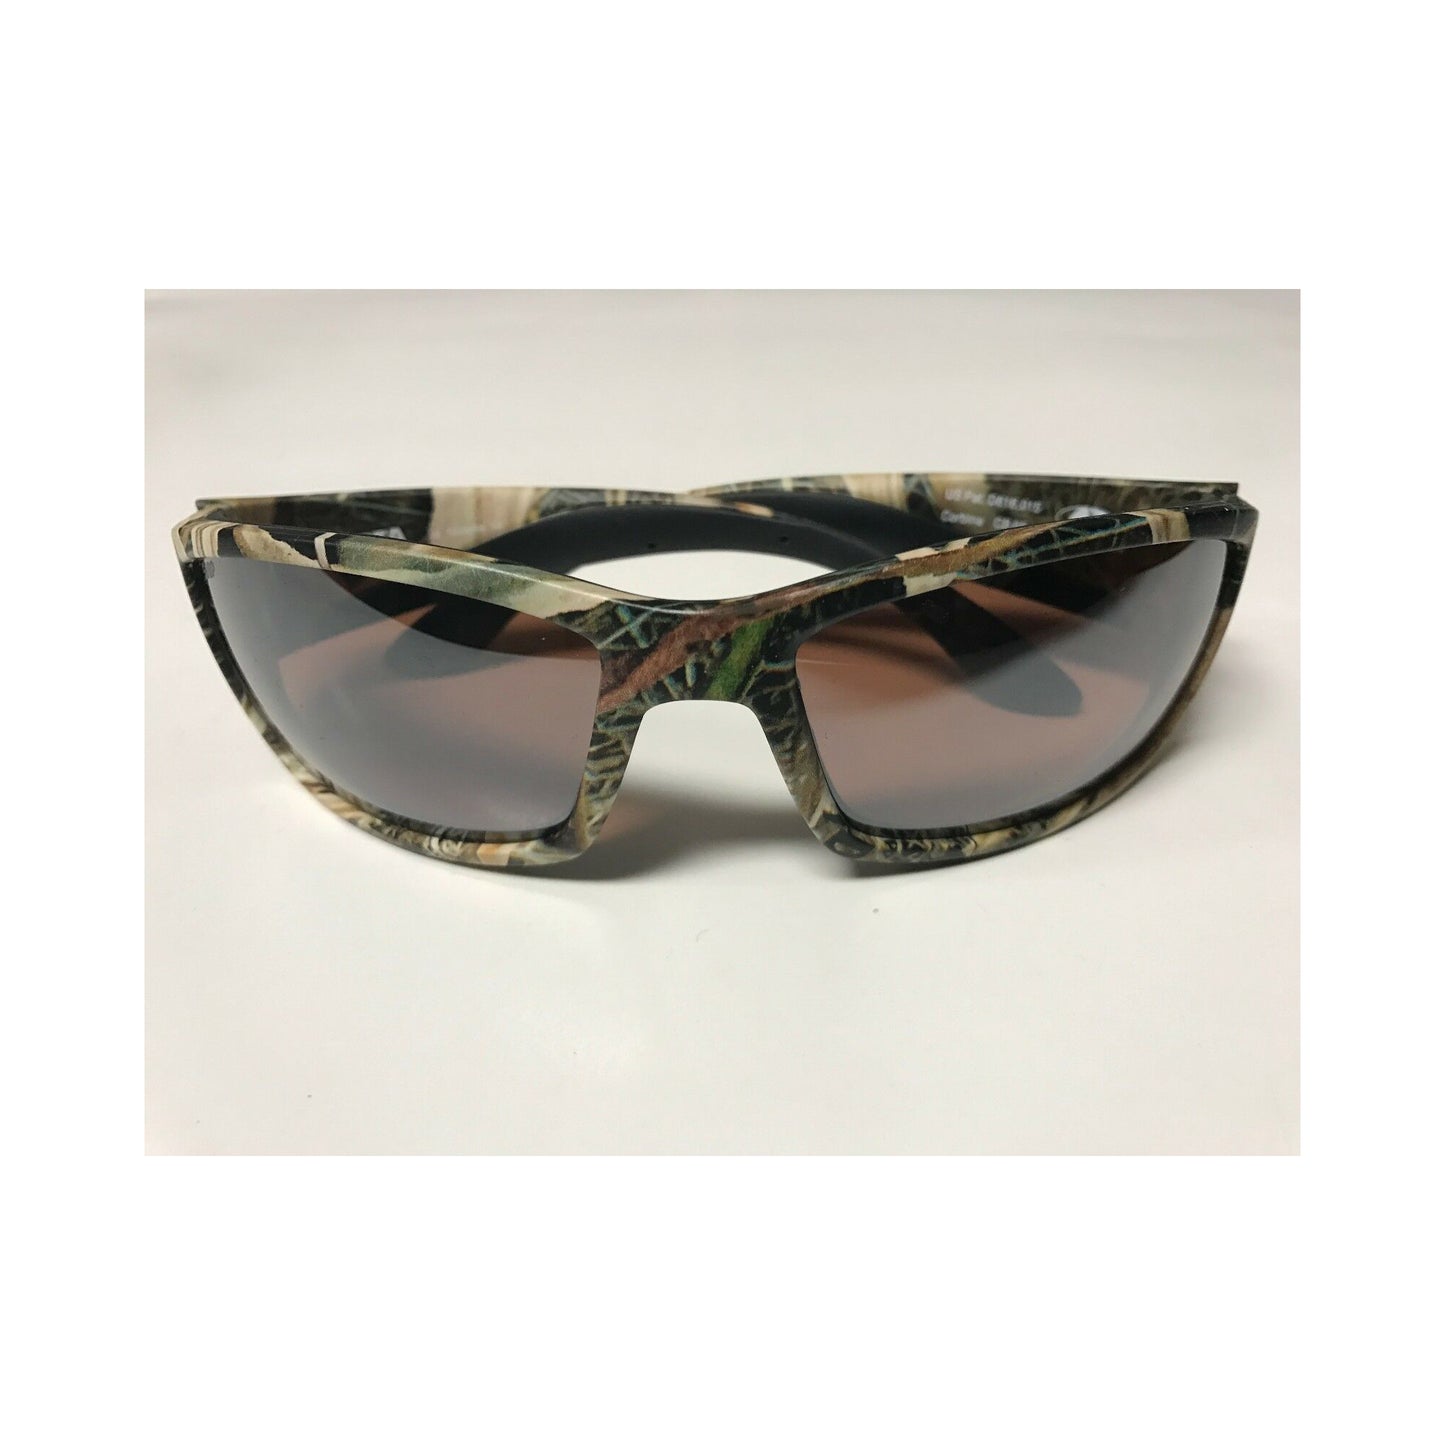 New Authentic Costa Corbina Polarized Sunglasses Mossy Oak Frame Silver Mirror Lens 580P